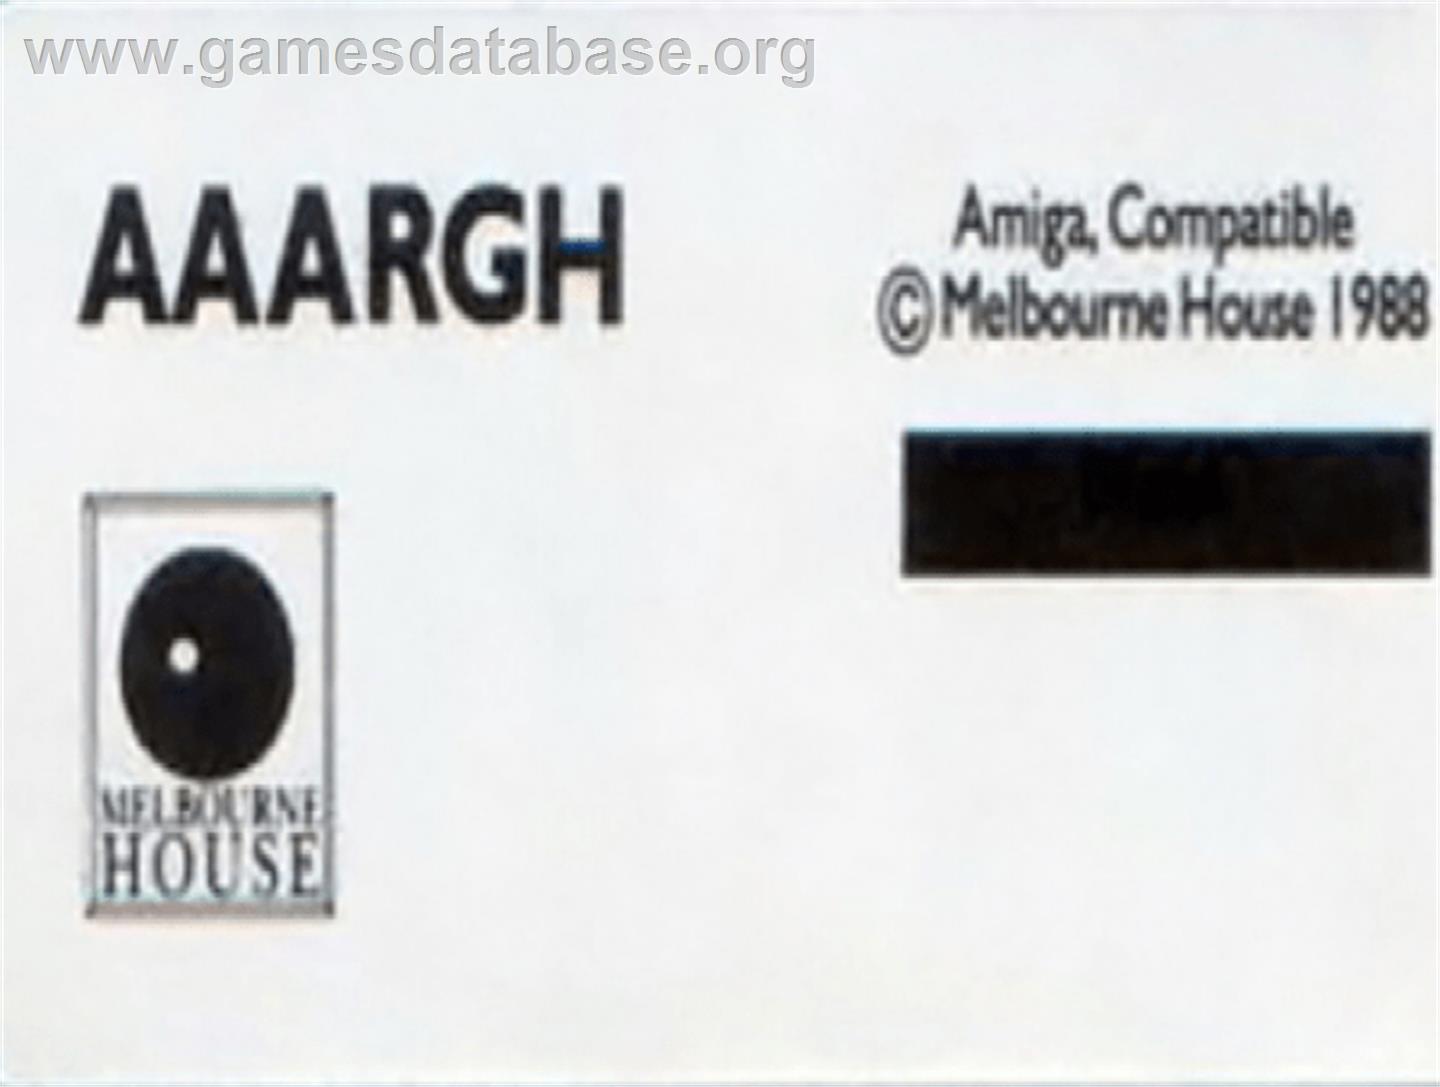 Aaargh - Commodore Amiga - Artwork - Cartridge Top